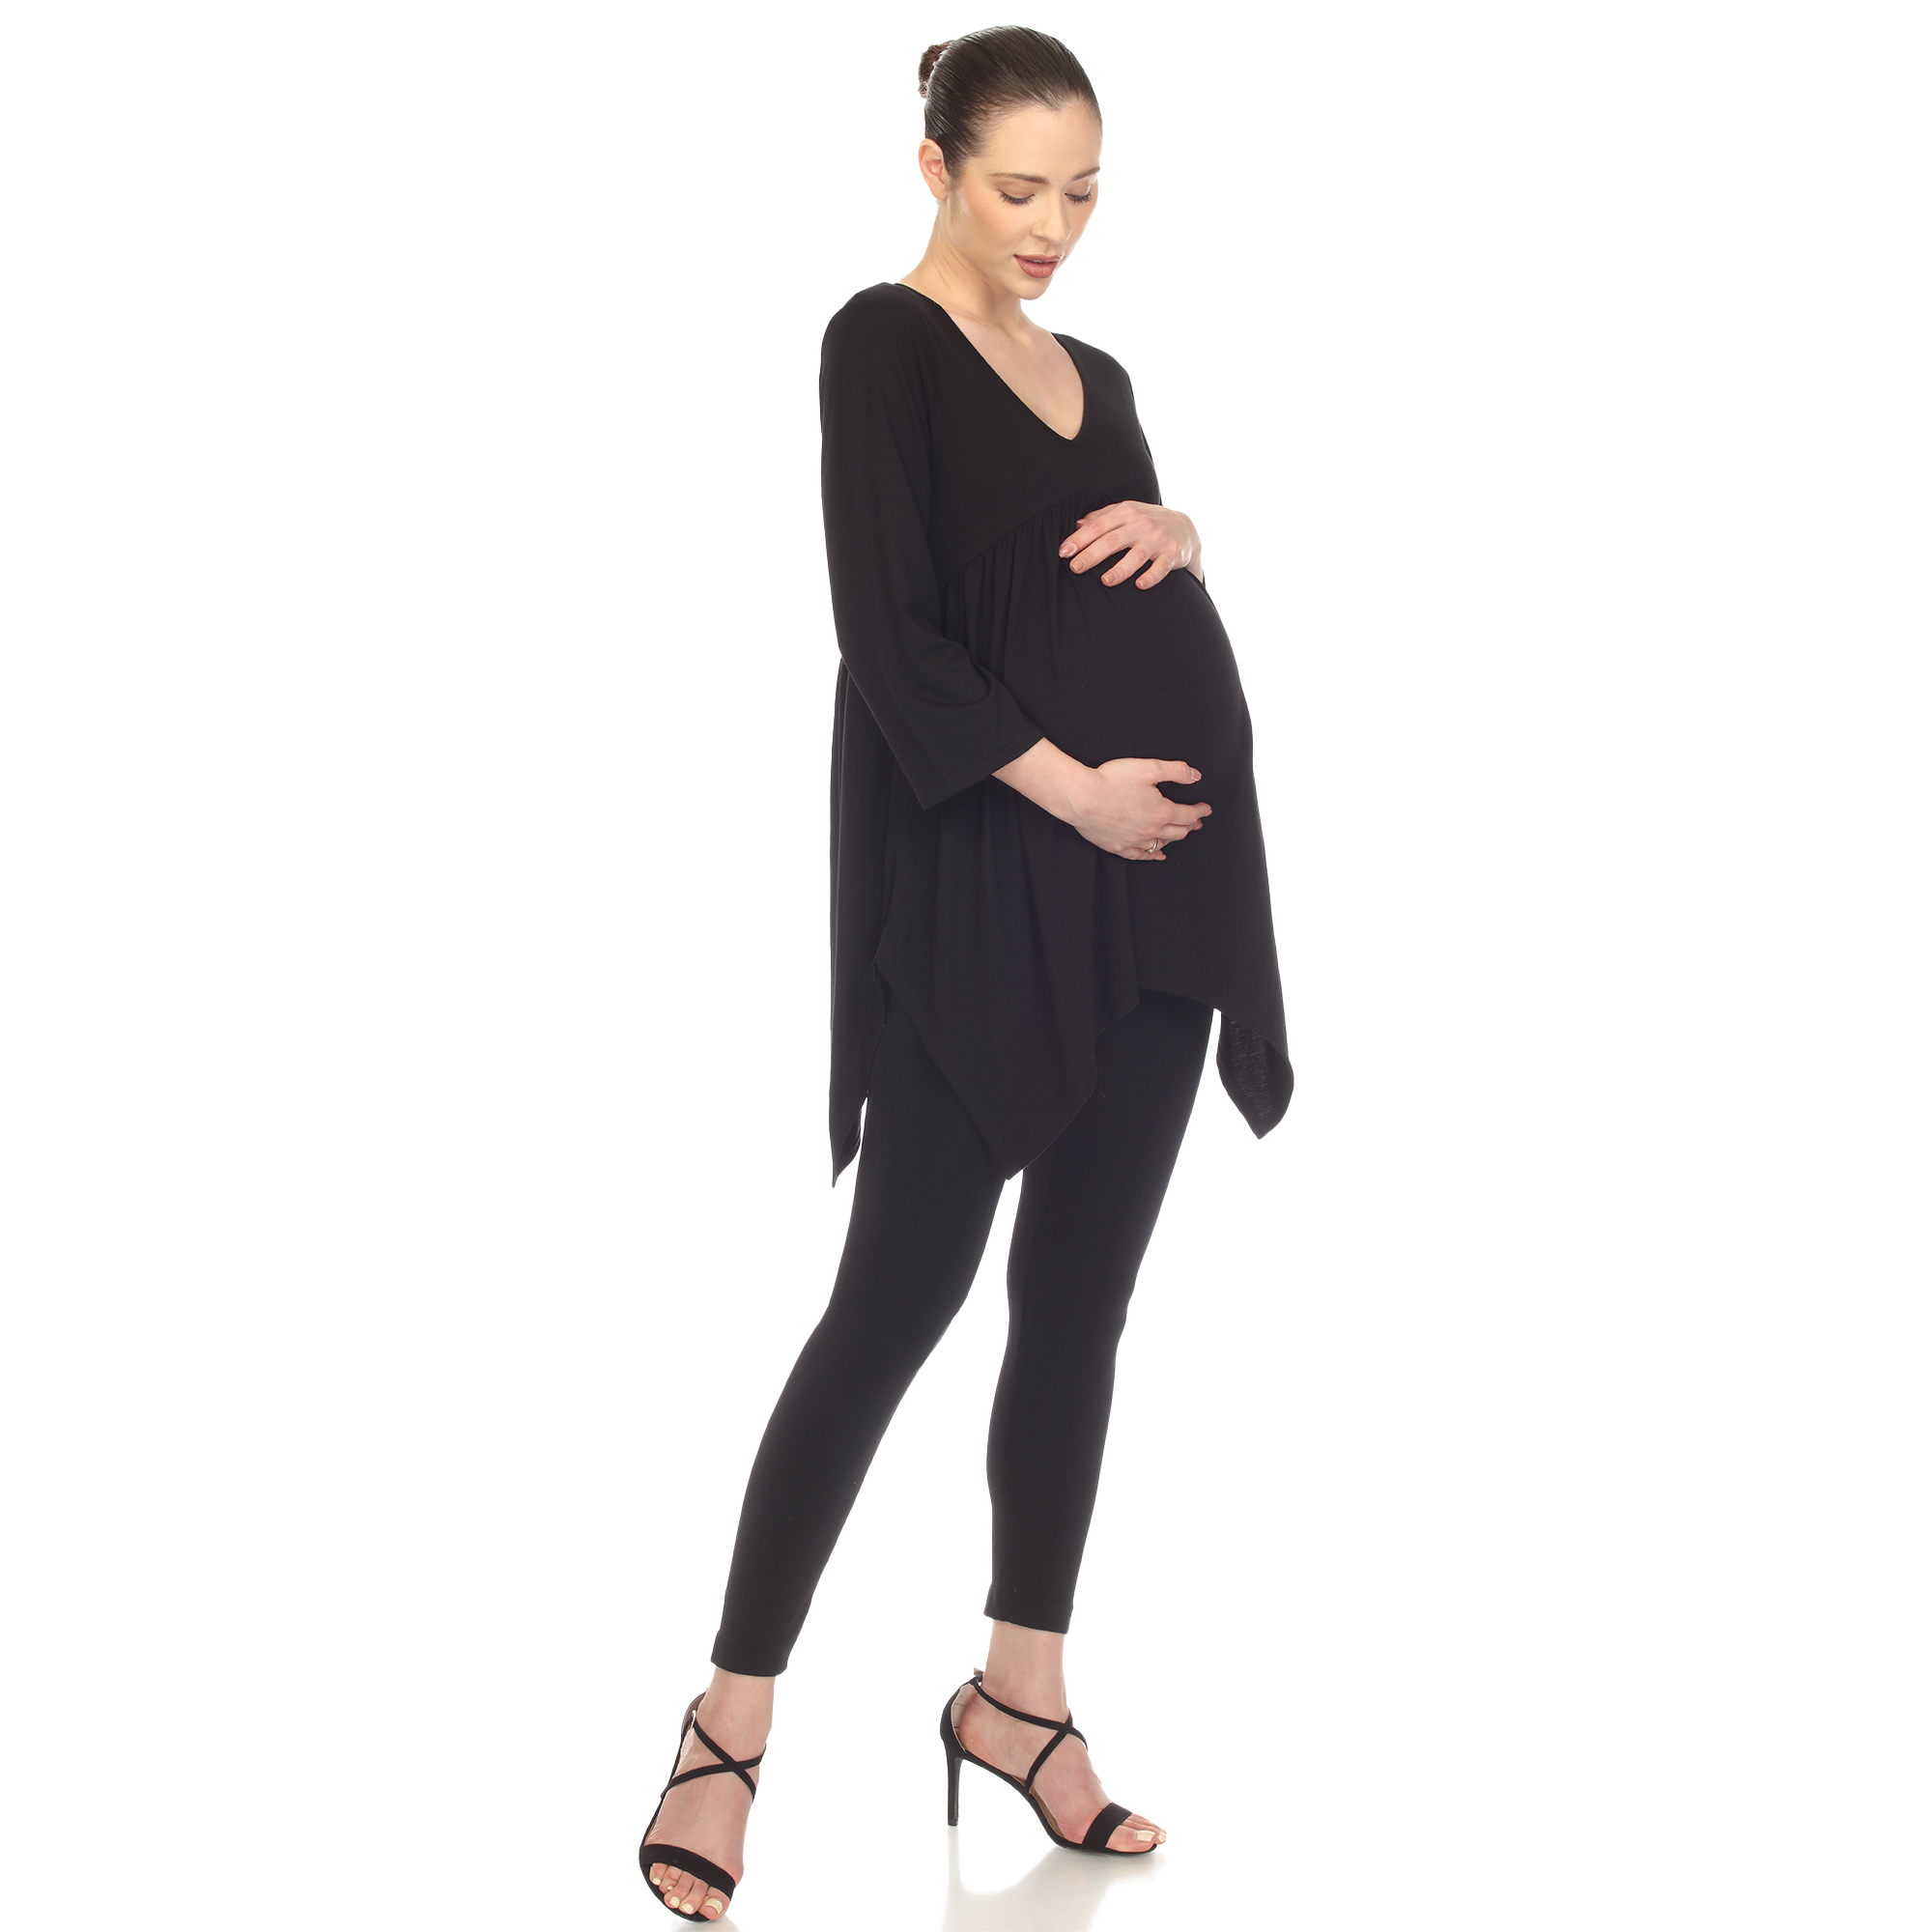 White Mark Women's Maternity Empire Waist V-Neck Tunic Top - Black, X-Large